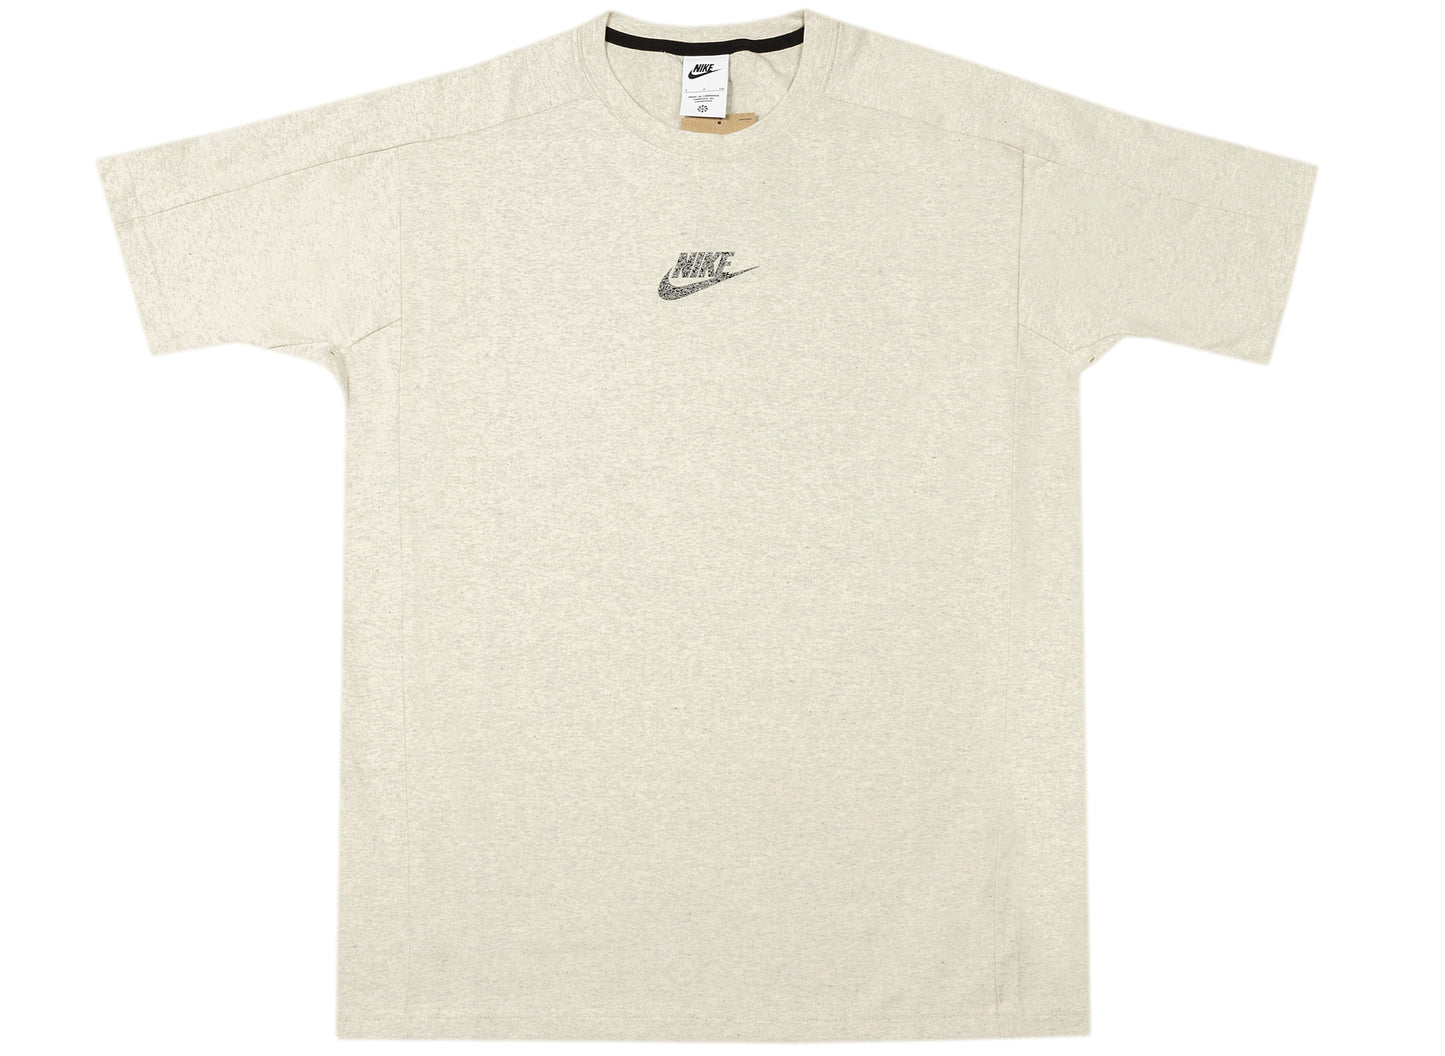 Nike Sportswear Revival Top in White